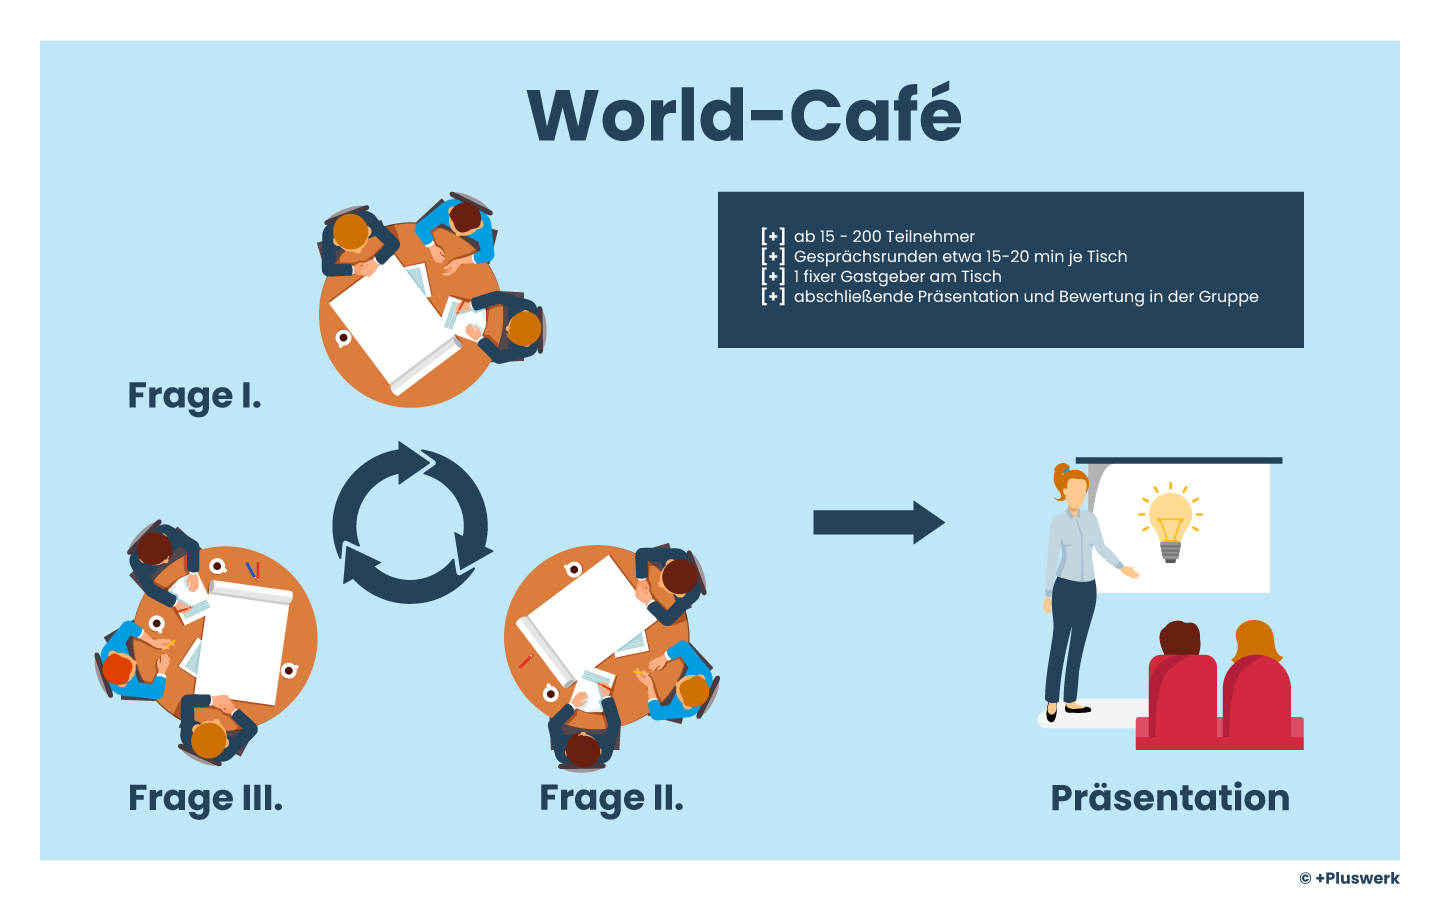 Illustration of the World Café method